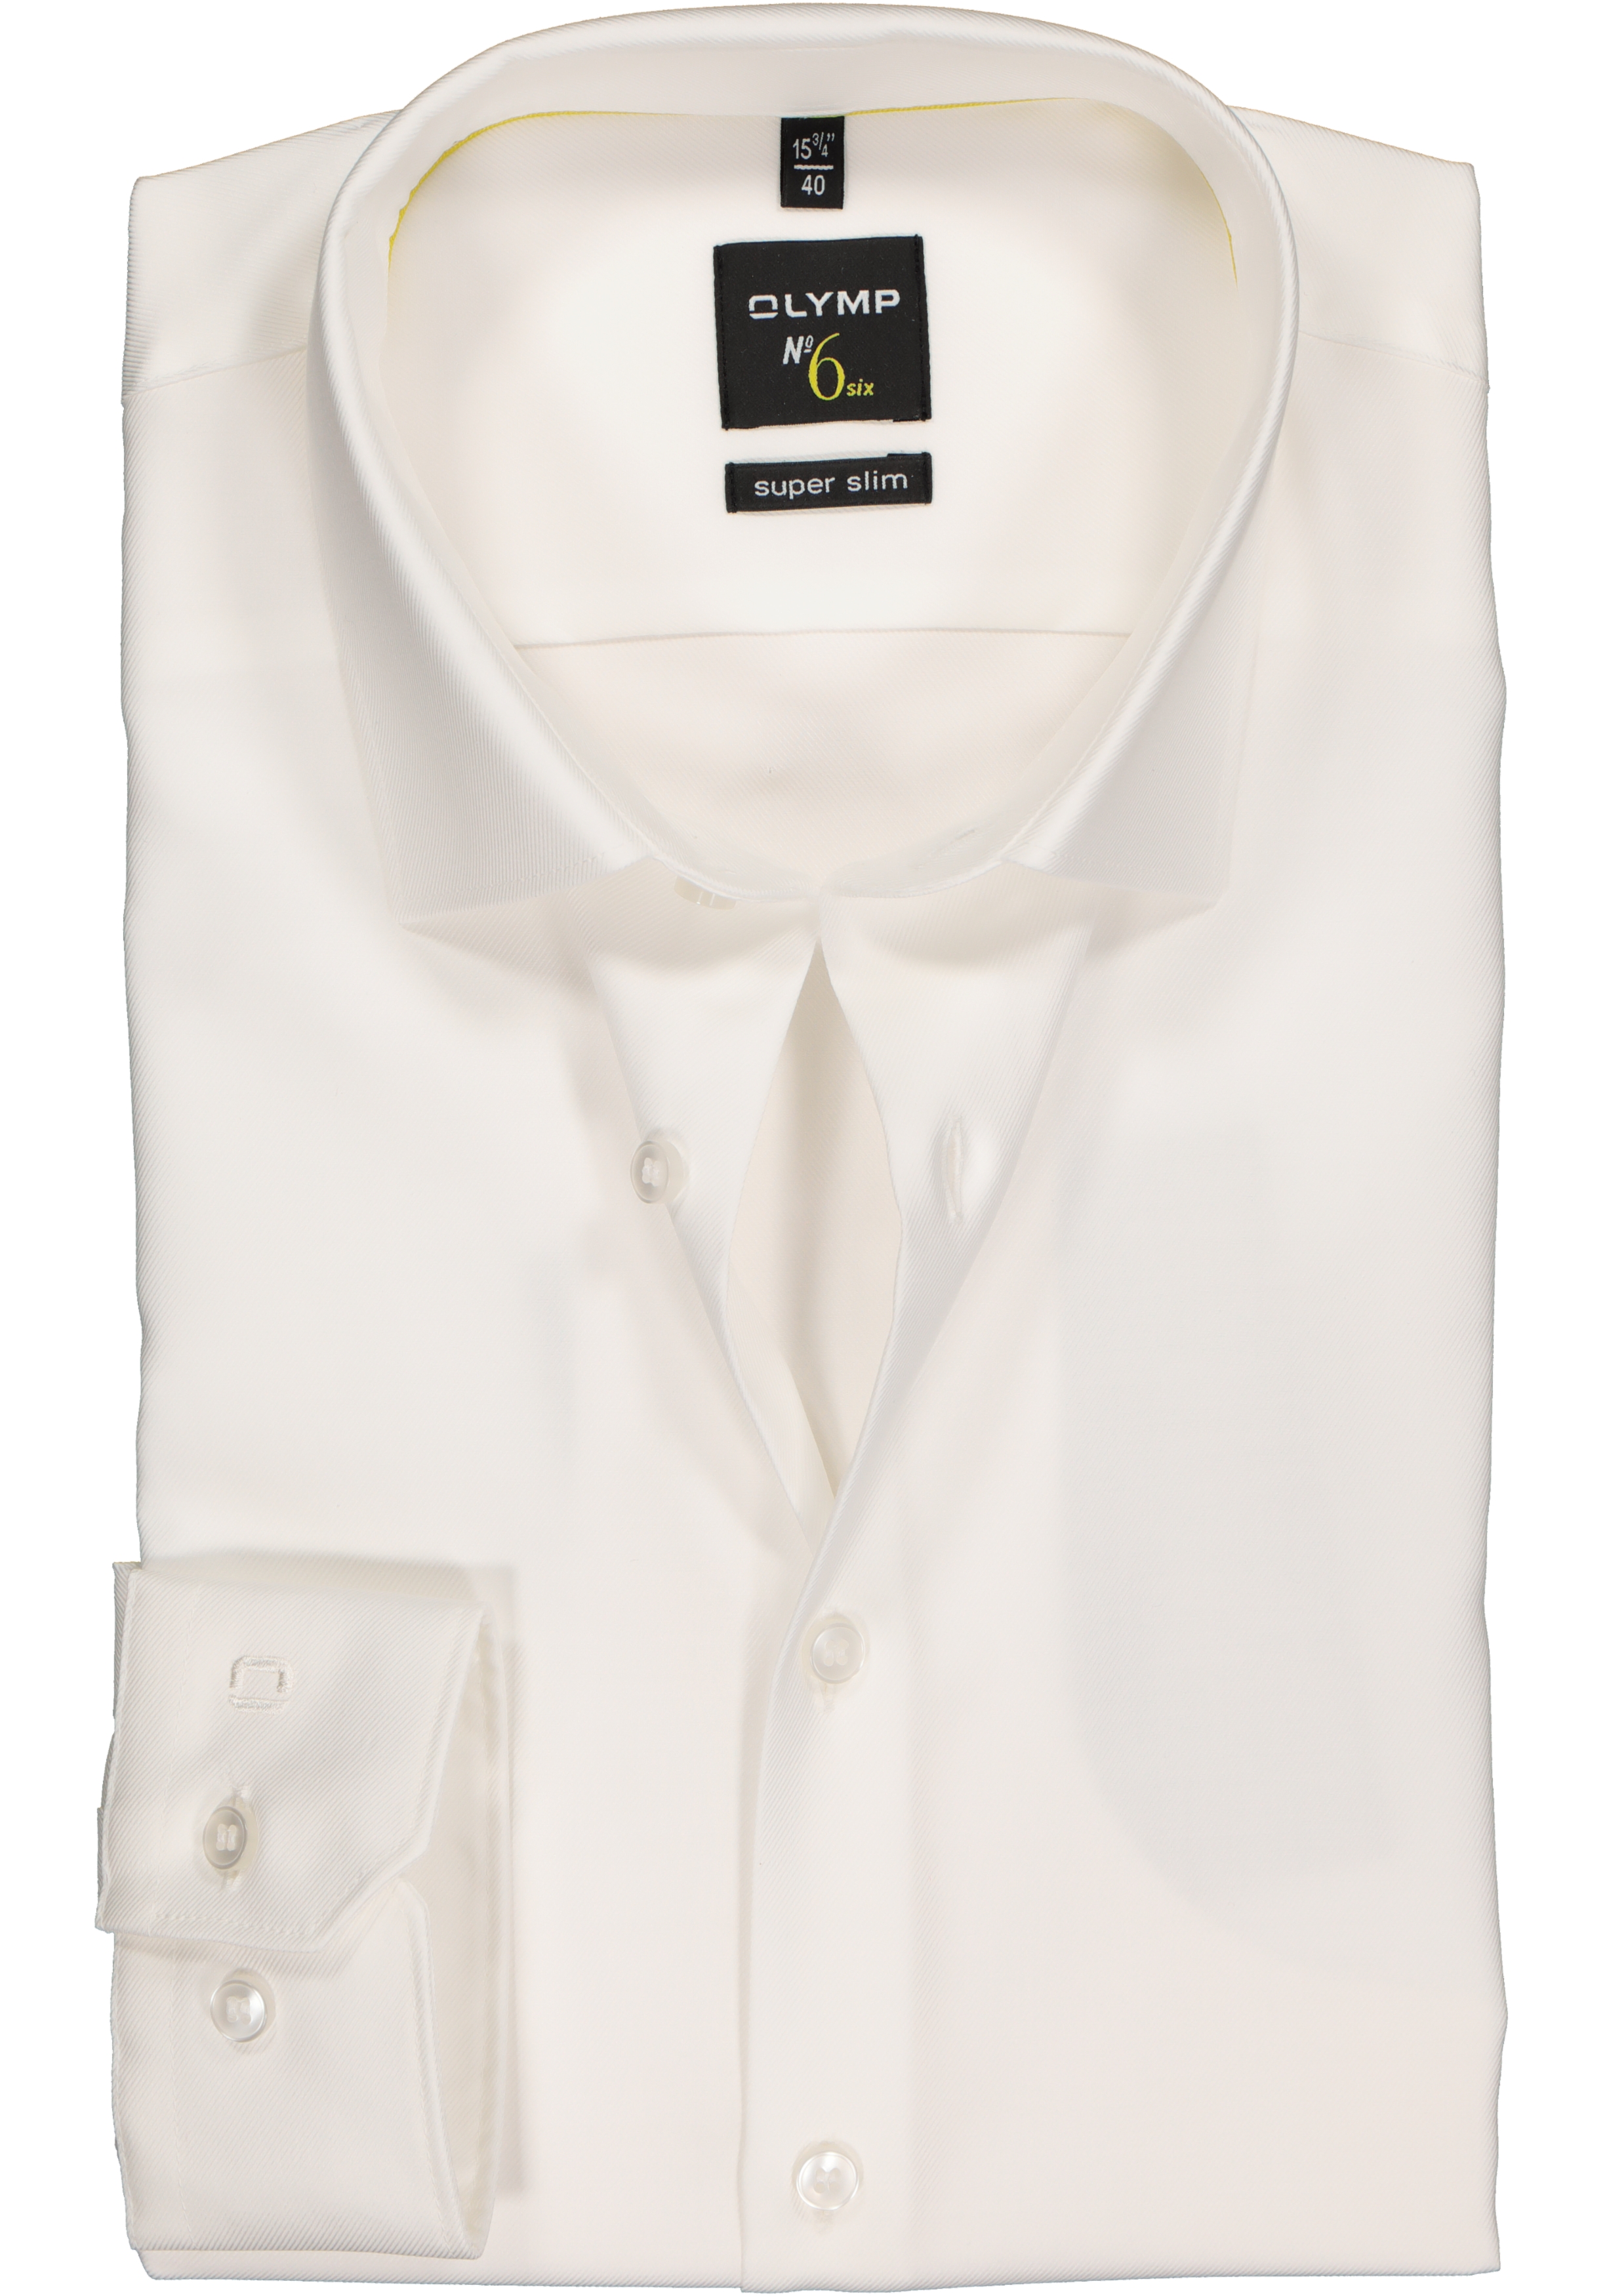 OLYMP No. Six super slim fit overhemd, off white twill - vakantie DEALS: bestel vele van topmerken met korting